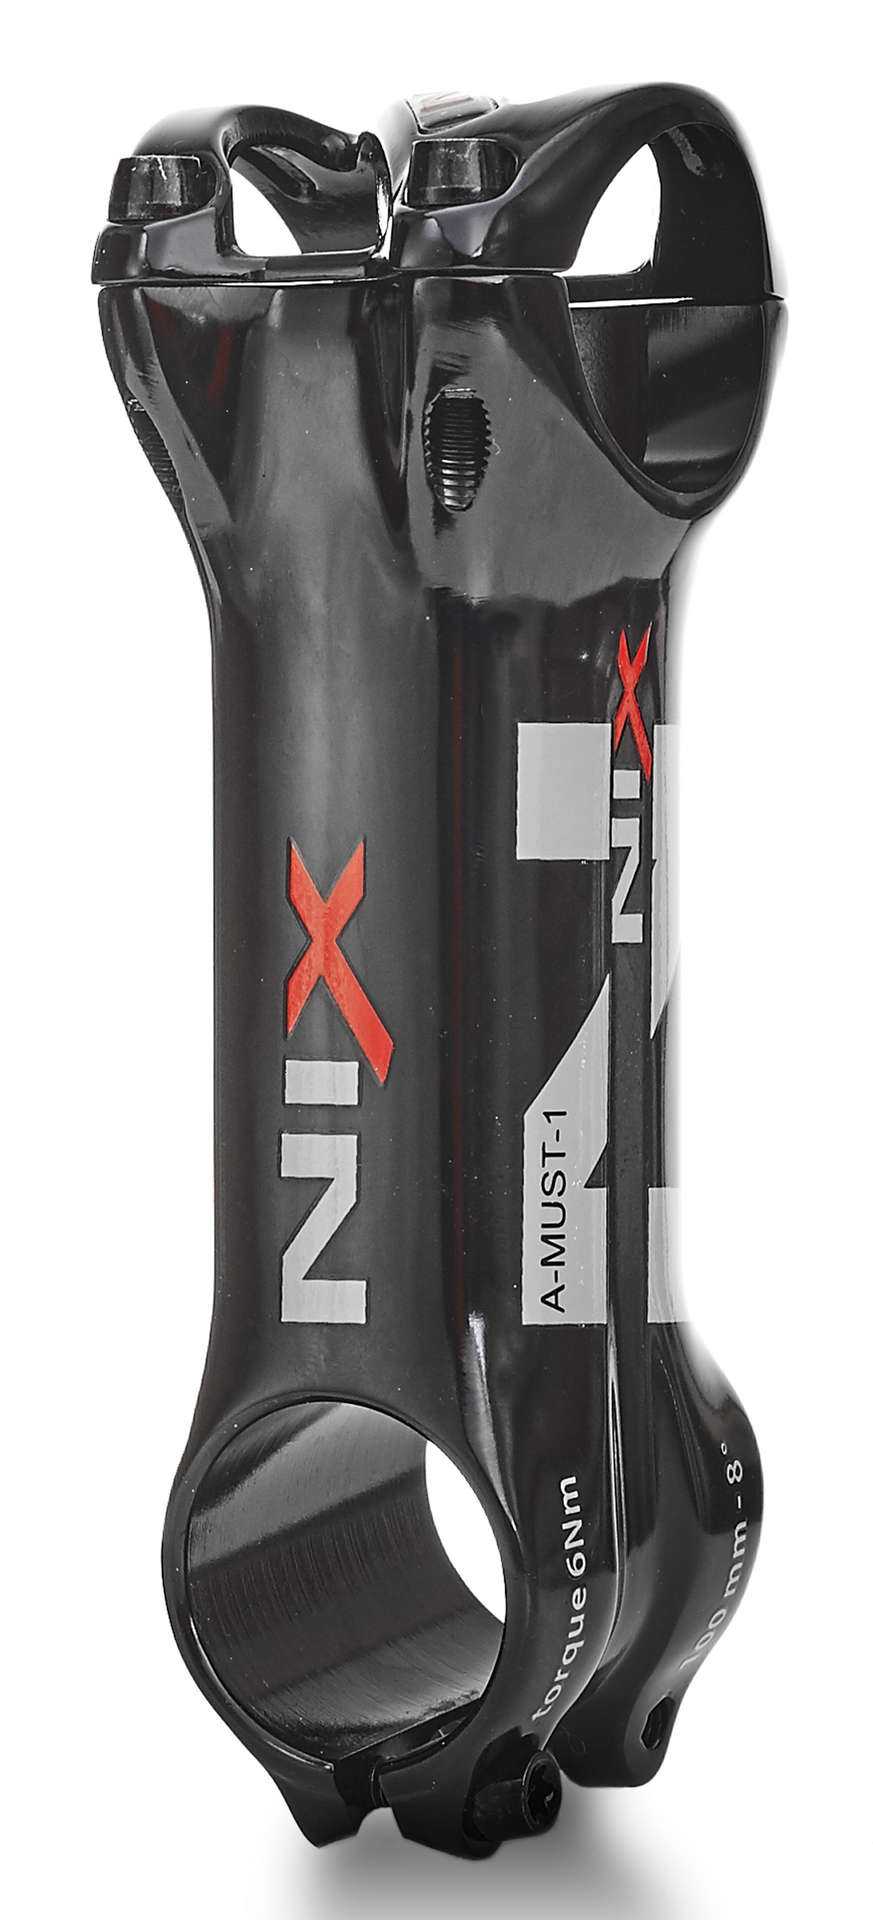 NIX A-Must-1 Aluminium Stuurpen Zwart 8 graden